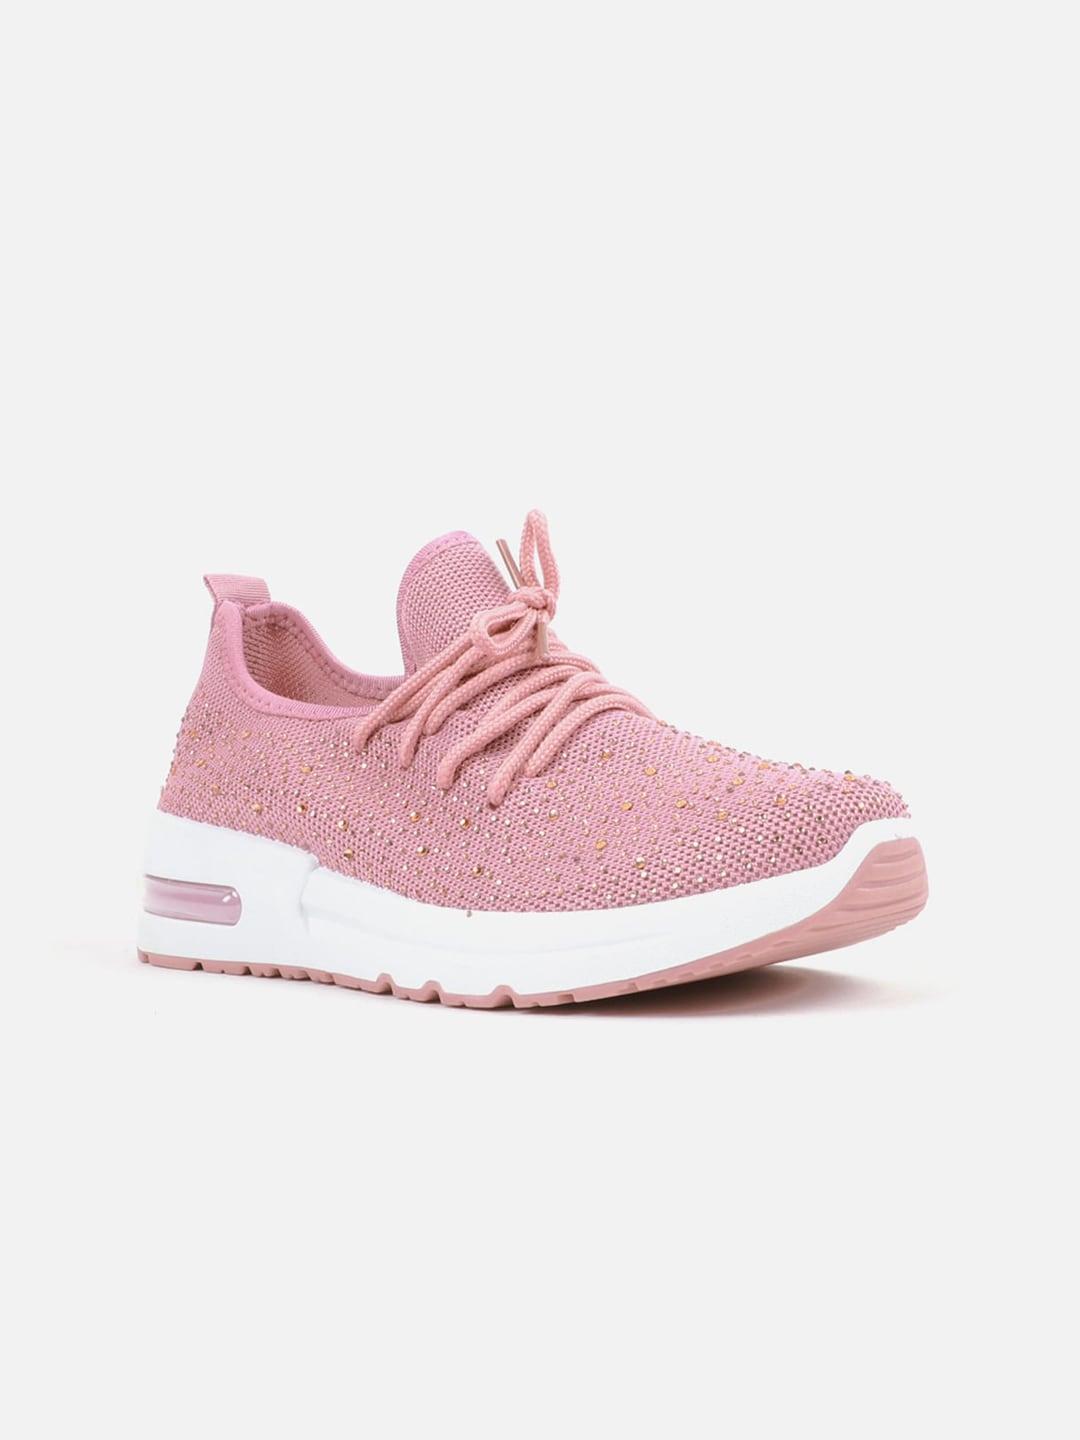 carlton london women pink embellished synthetic sneakers